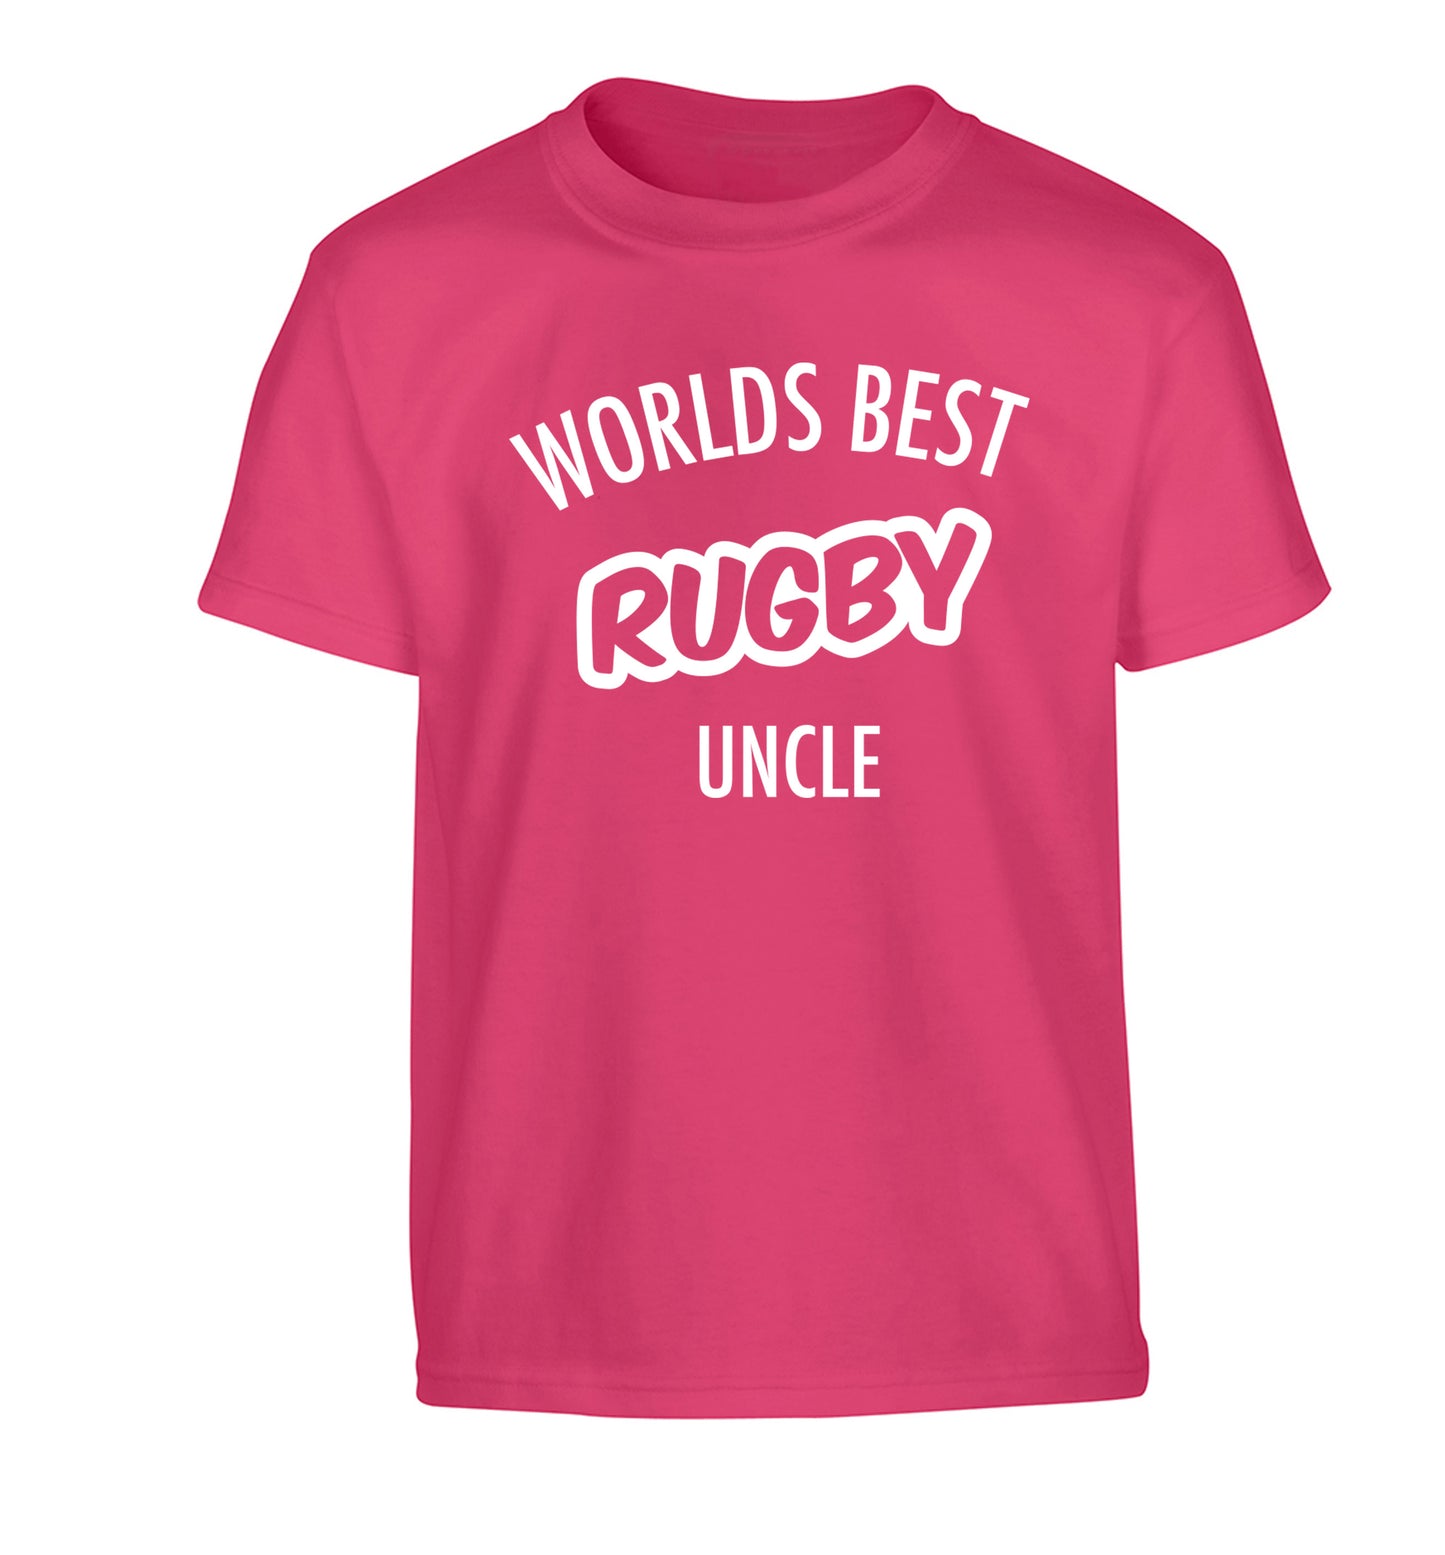 Worlds best rugby uncle Children's pink Tshirt 12-13 Years